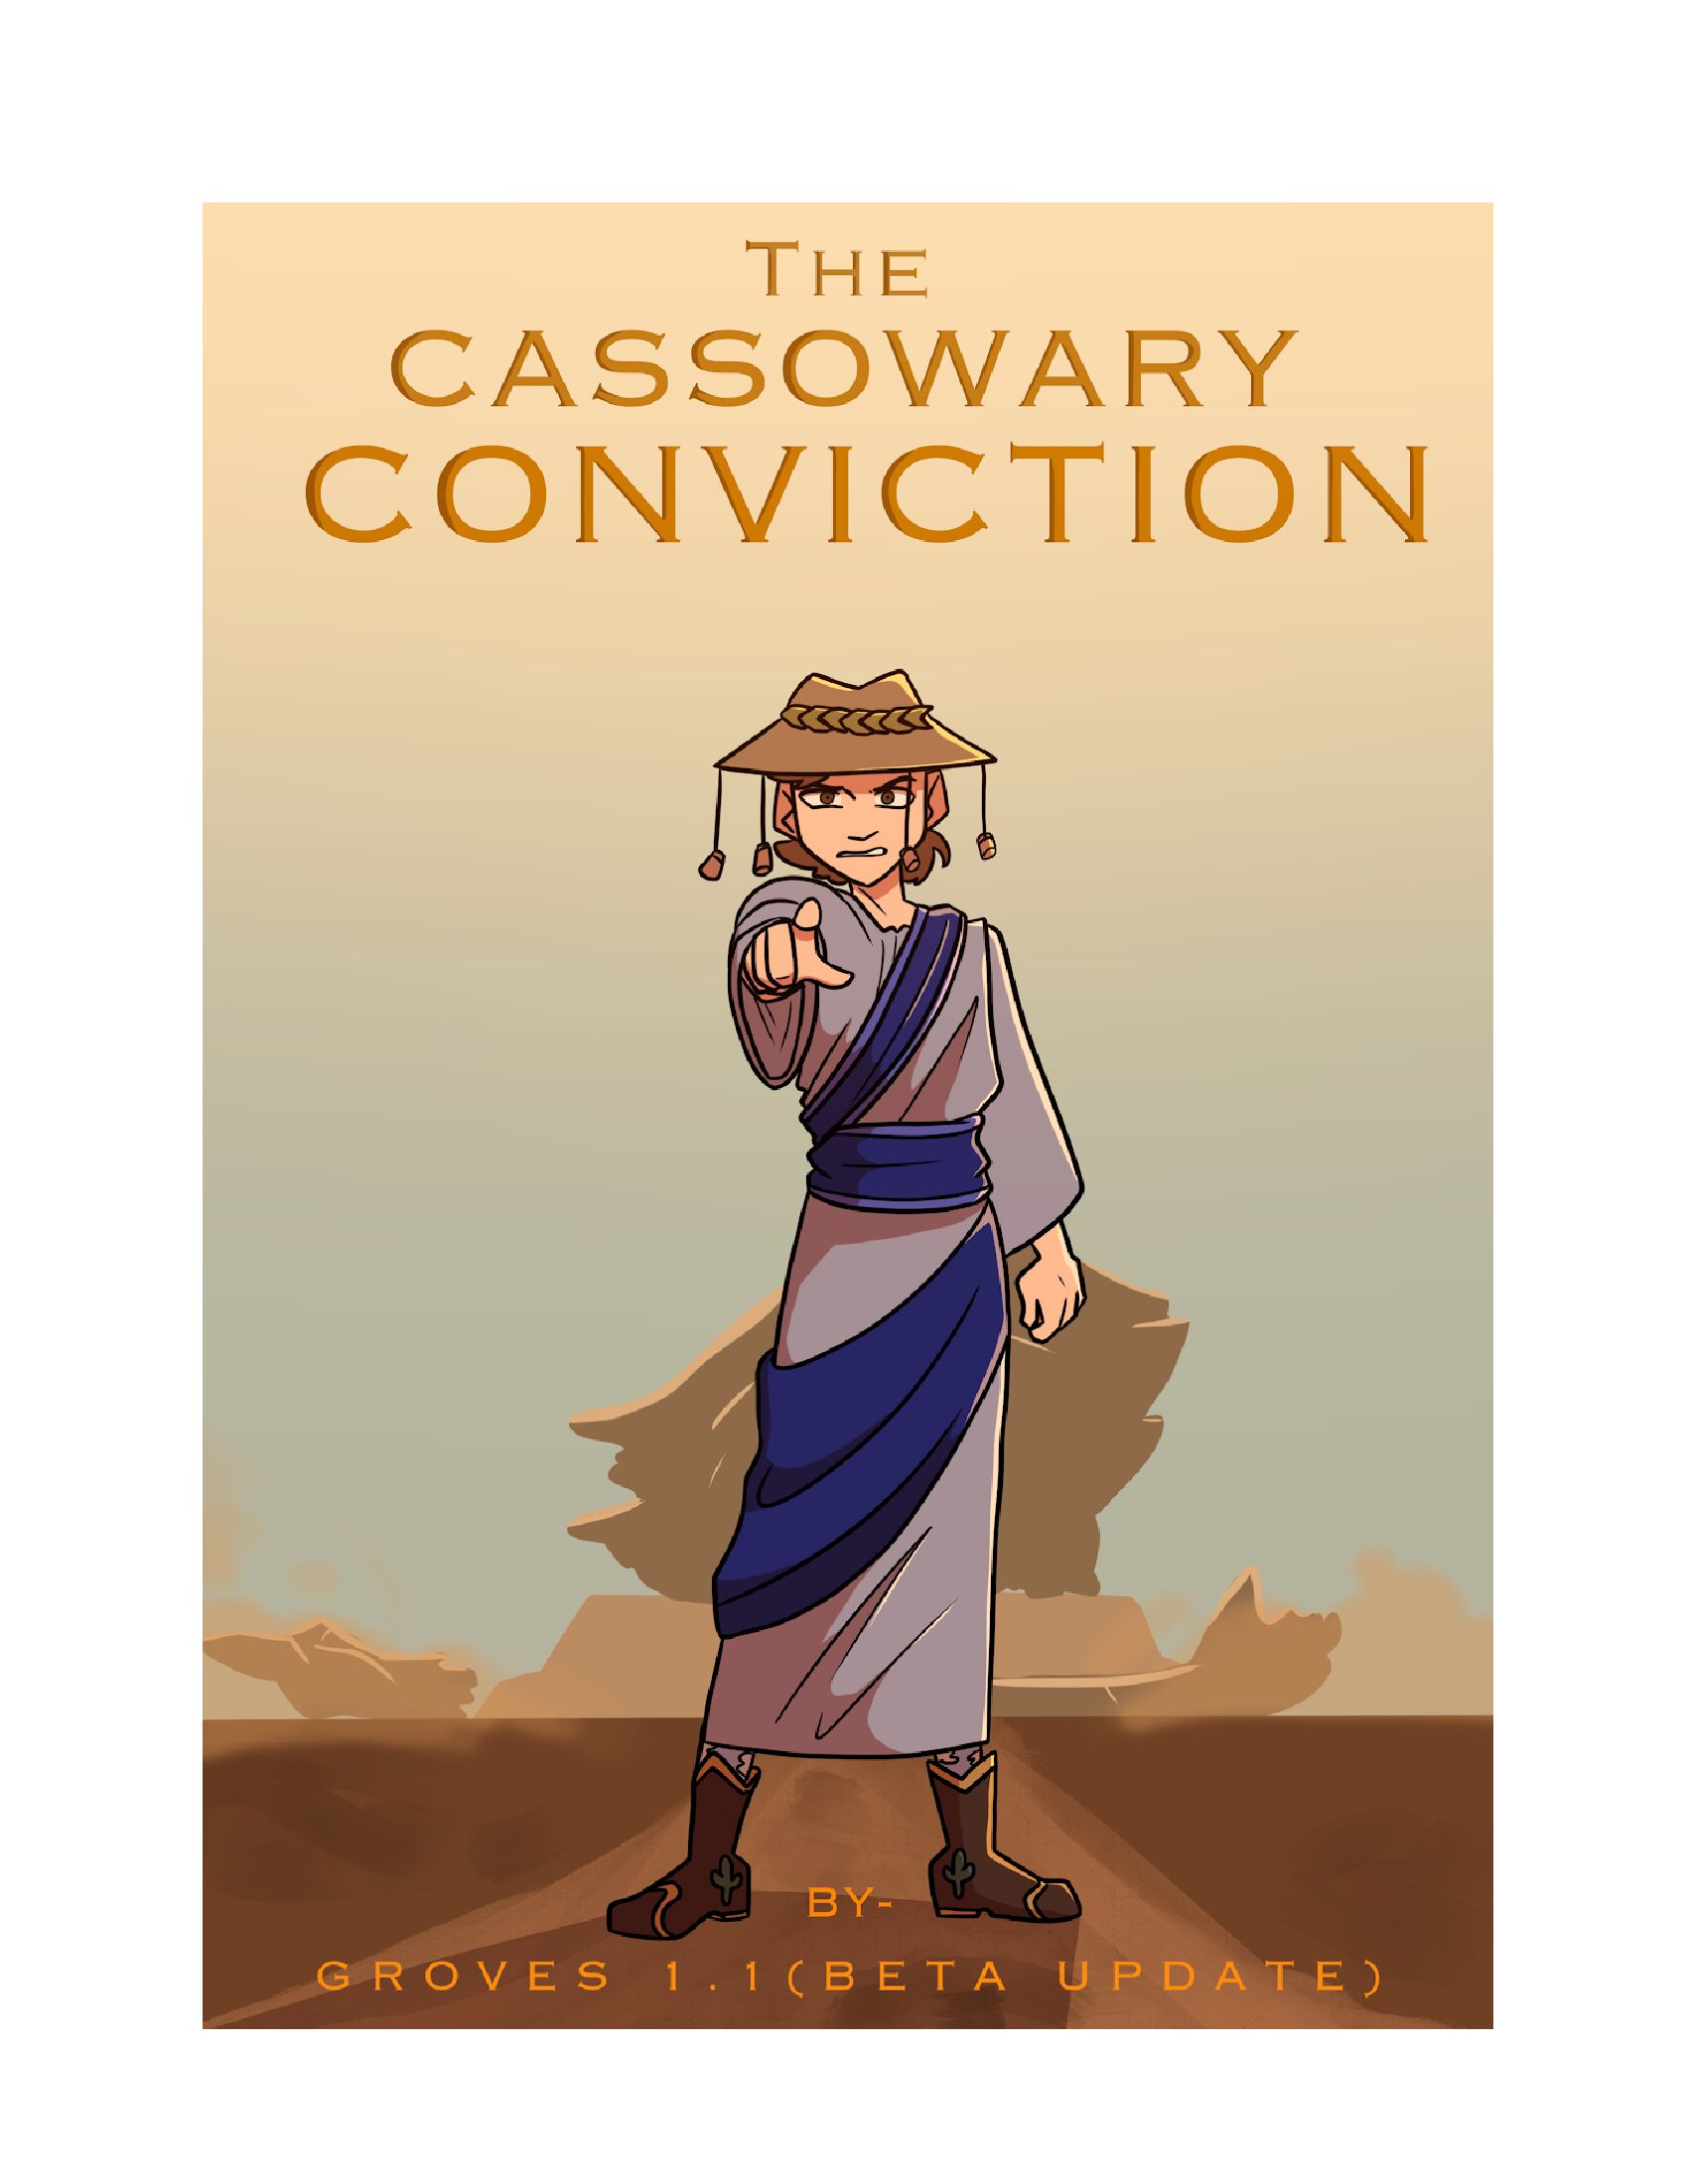 The Cassowary Conviction